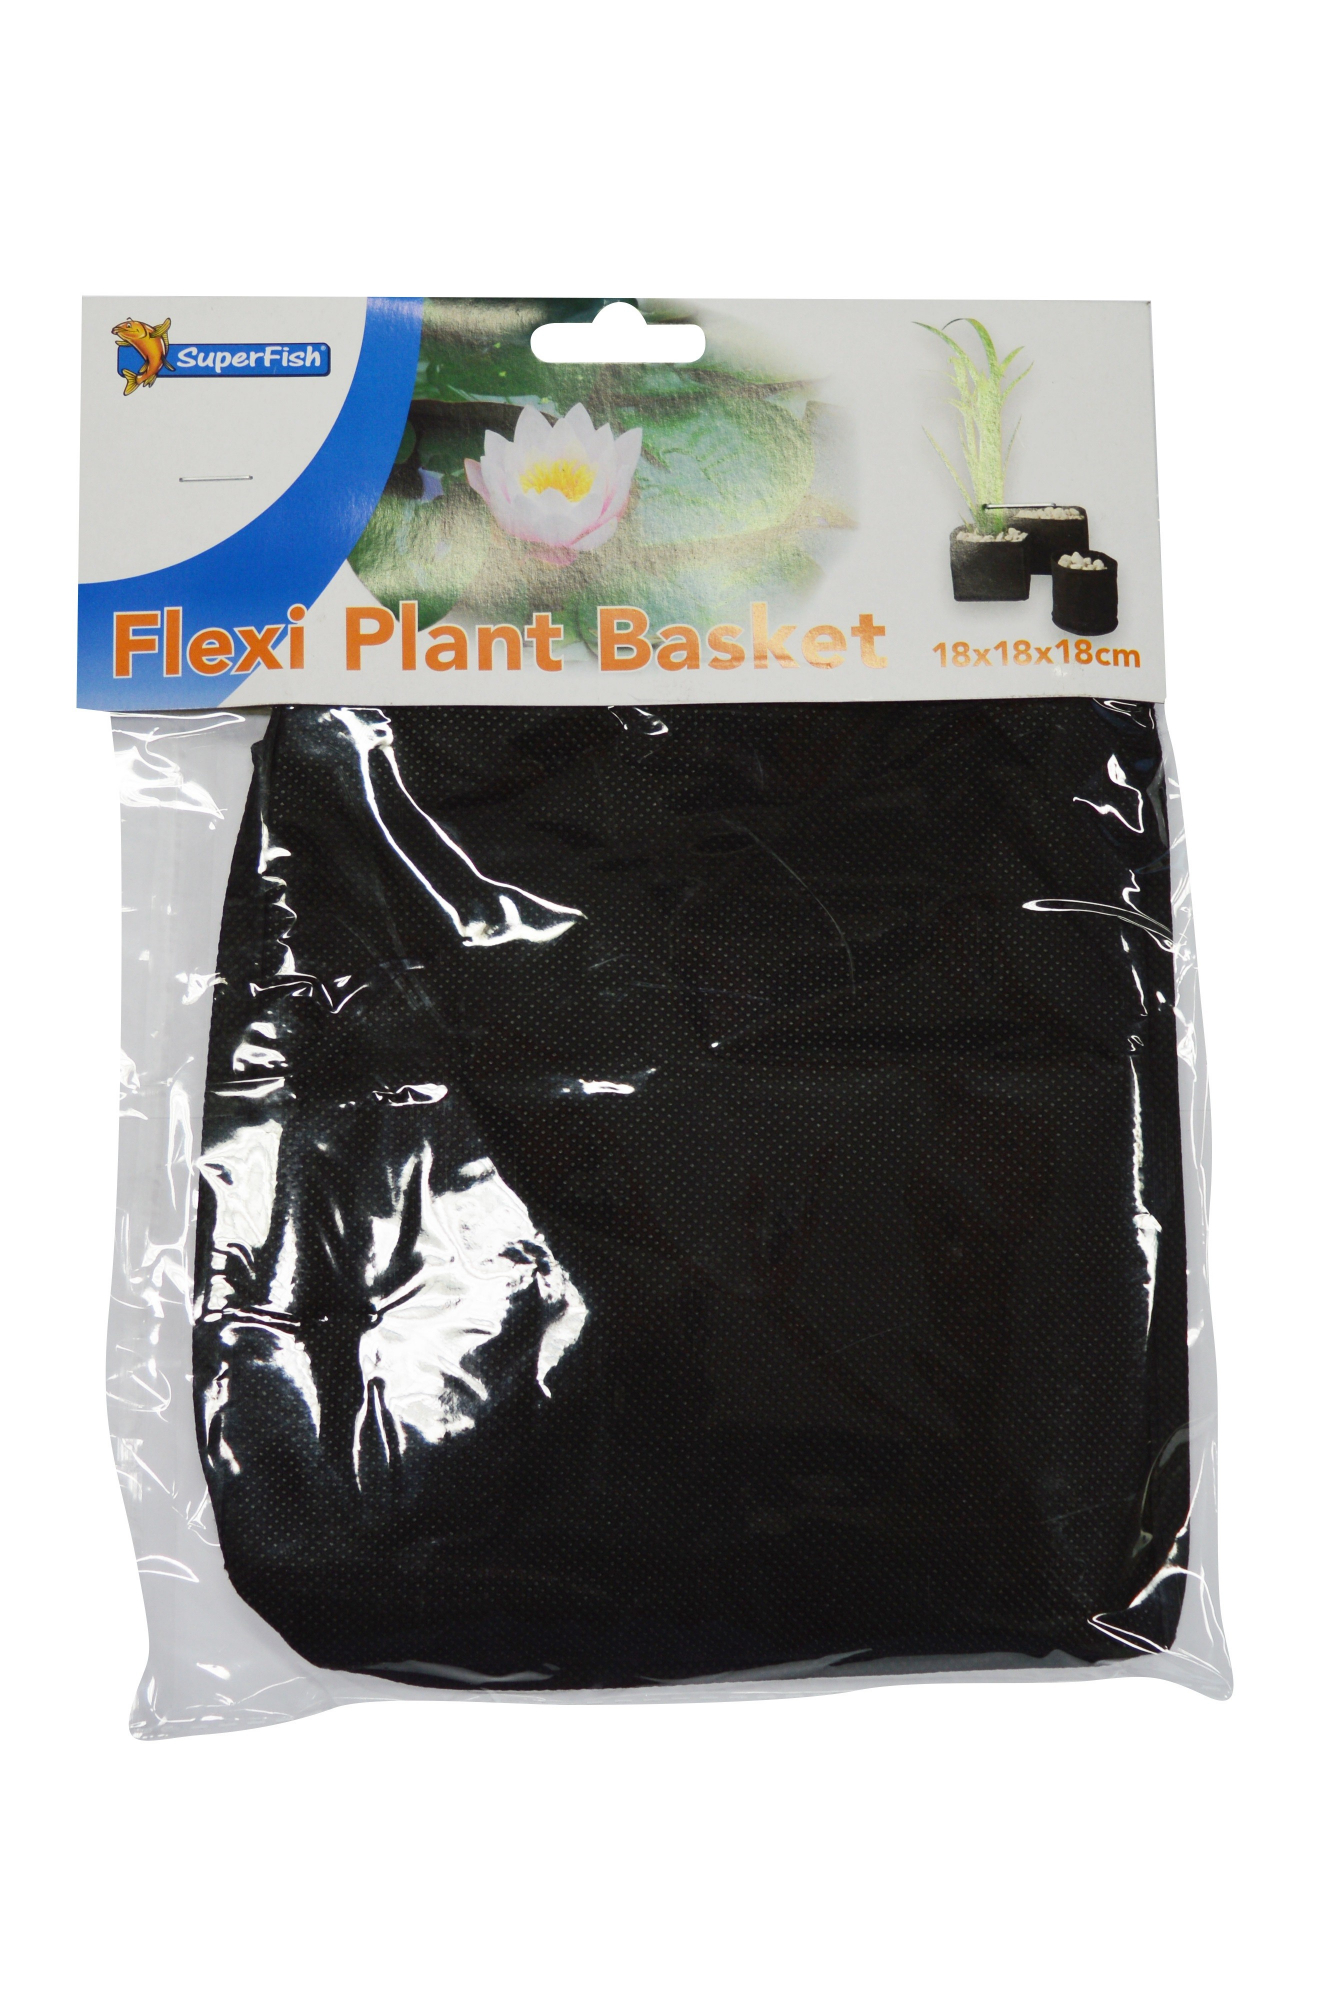 Cesta blanda FLEXI PLANT 4 modelos